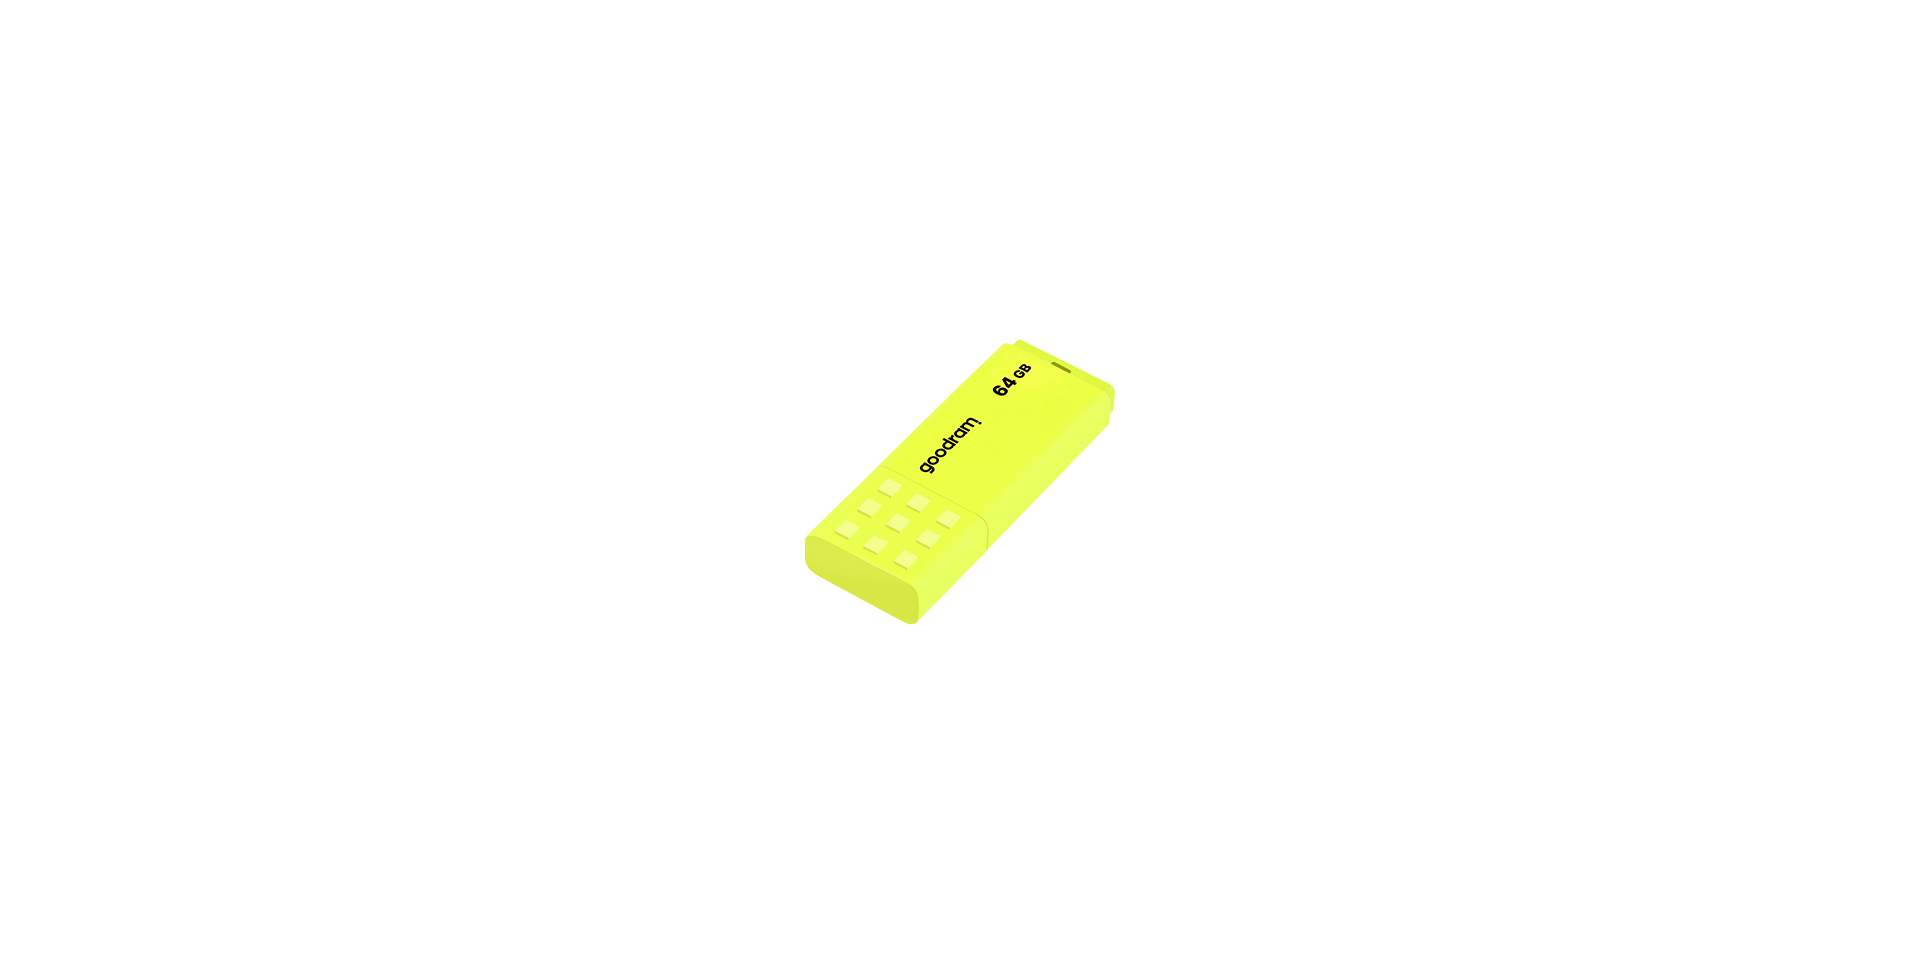 128GB USB 2.0 Yellow - UME2